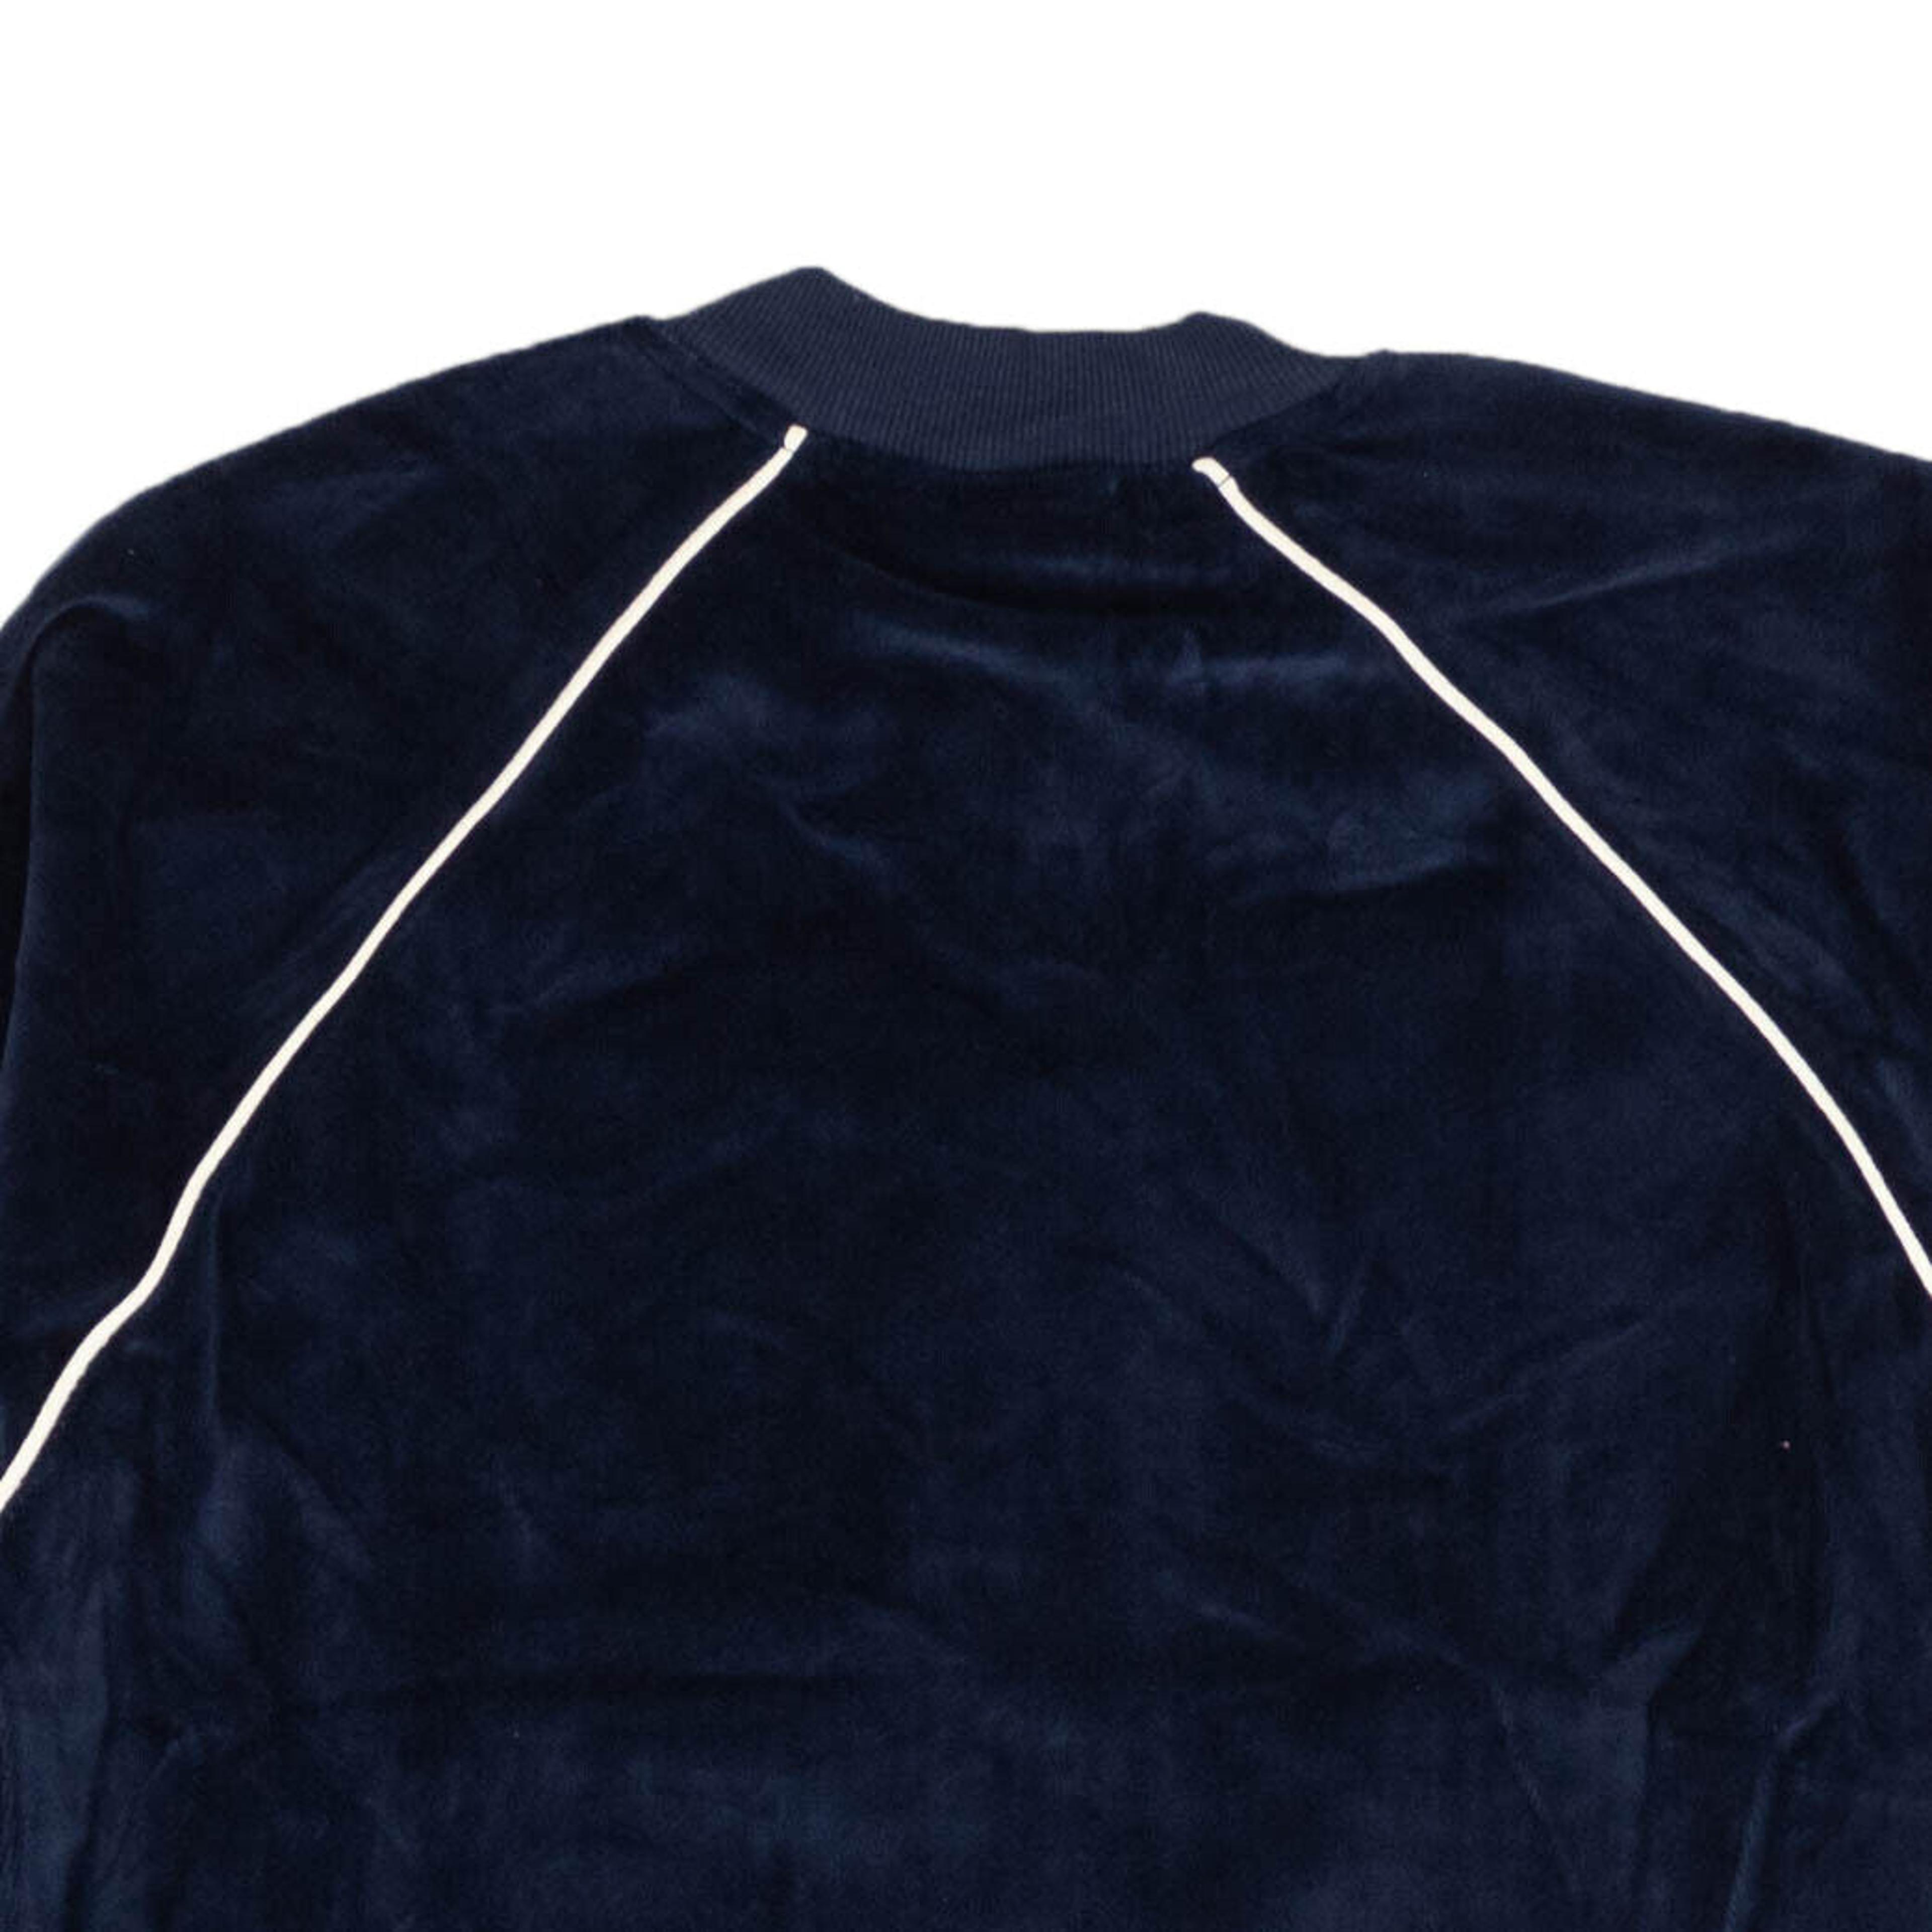 Alternate View 2 of Blue Velour Zip-Up Sweatshirt